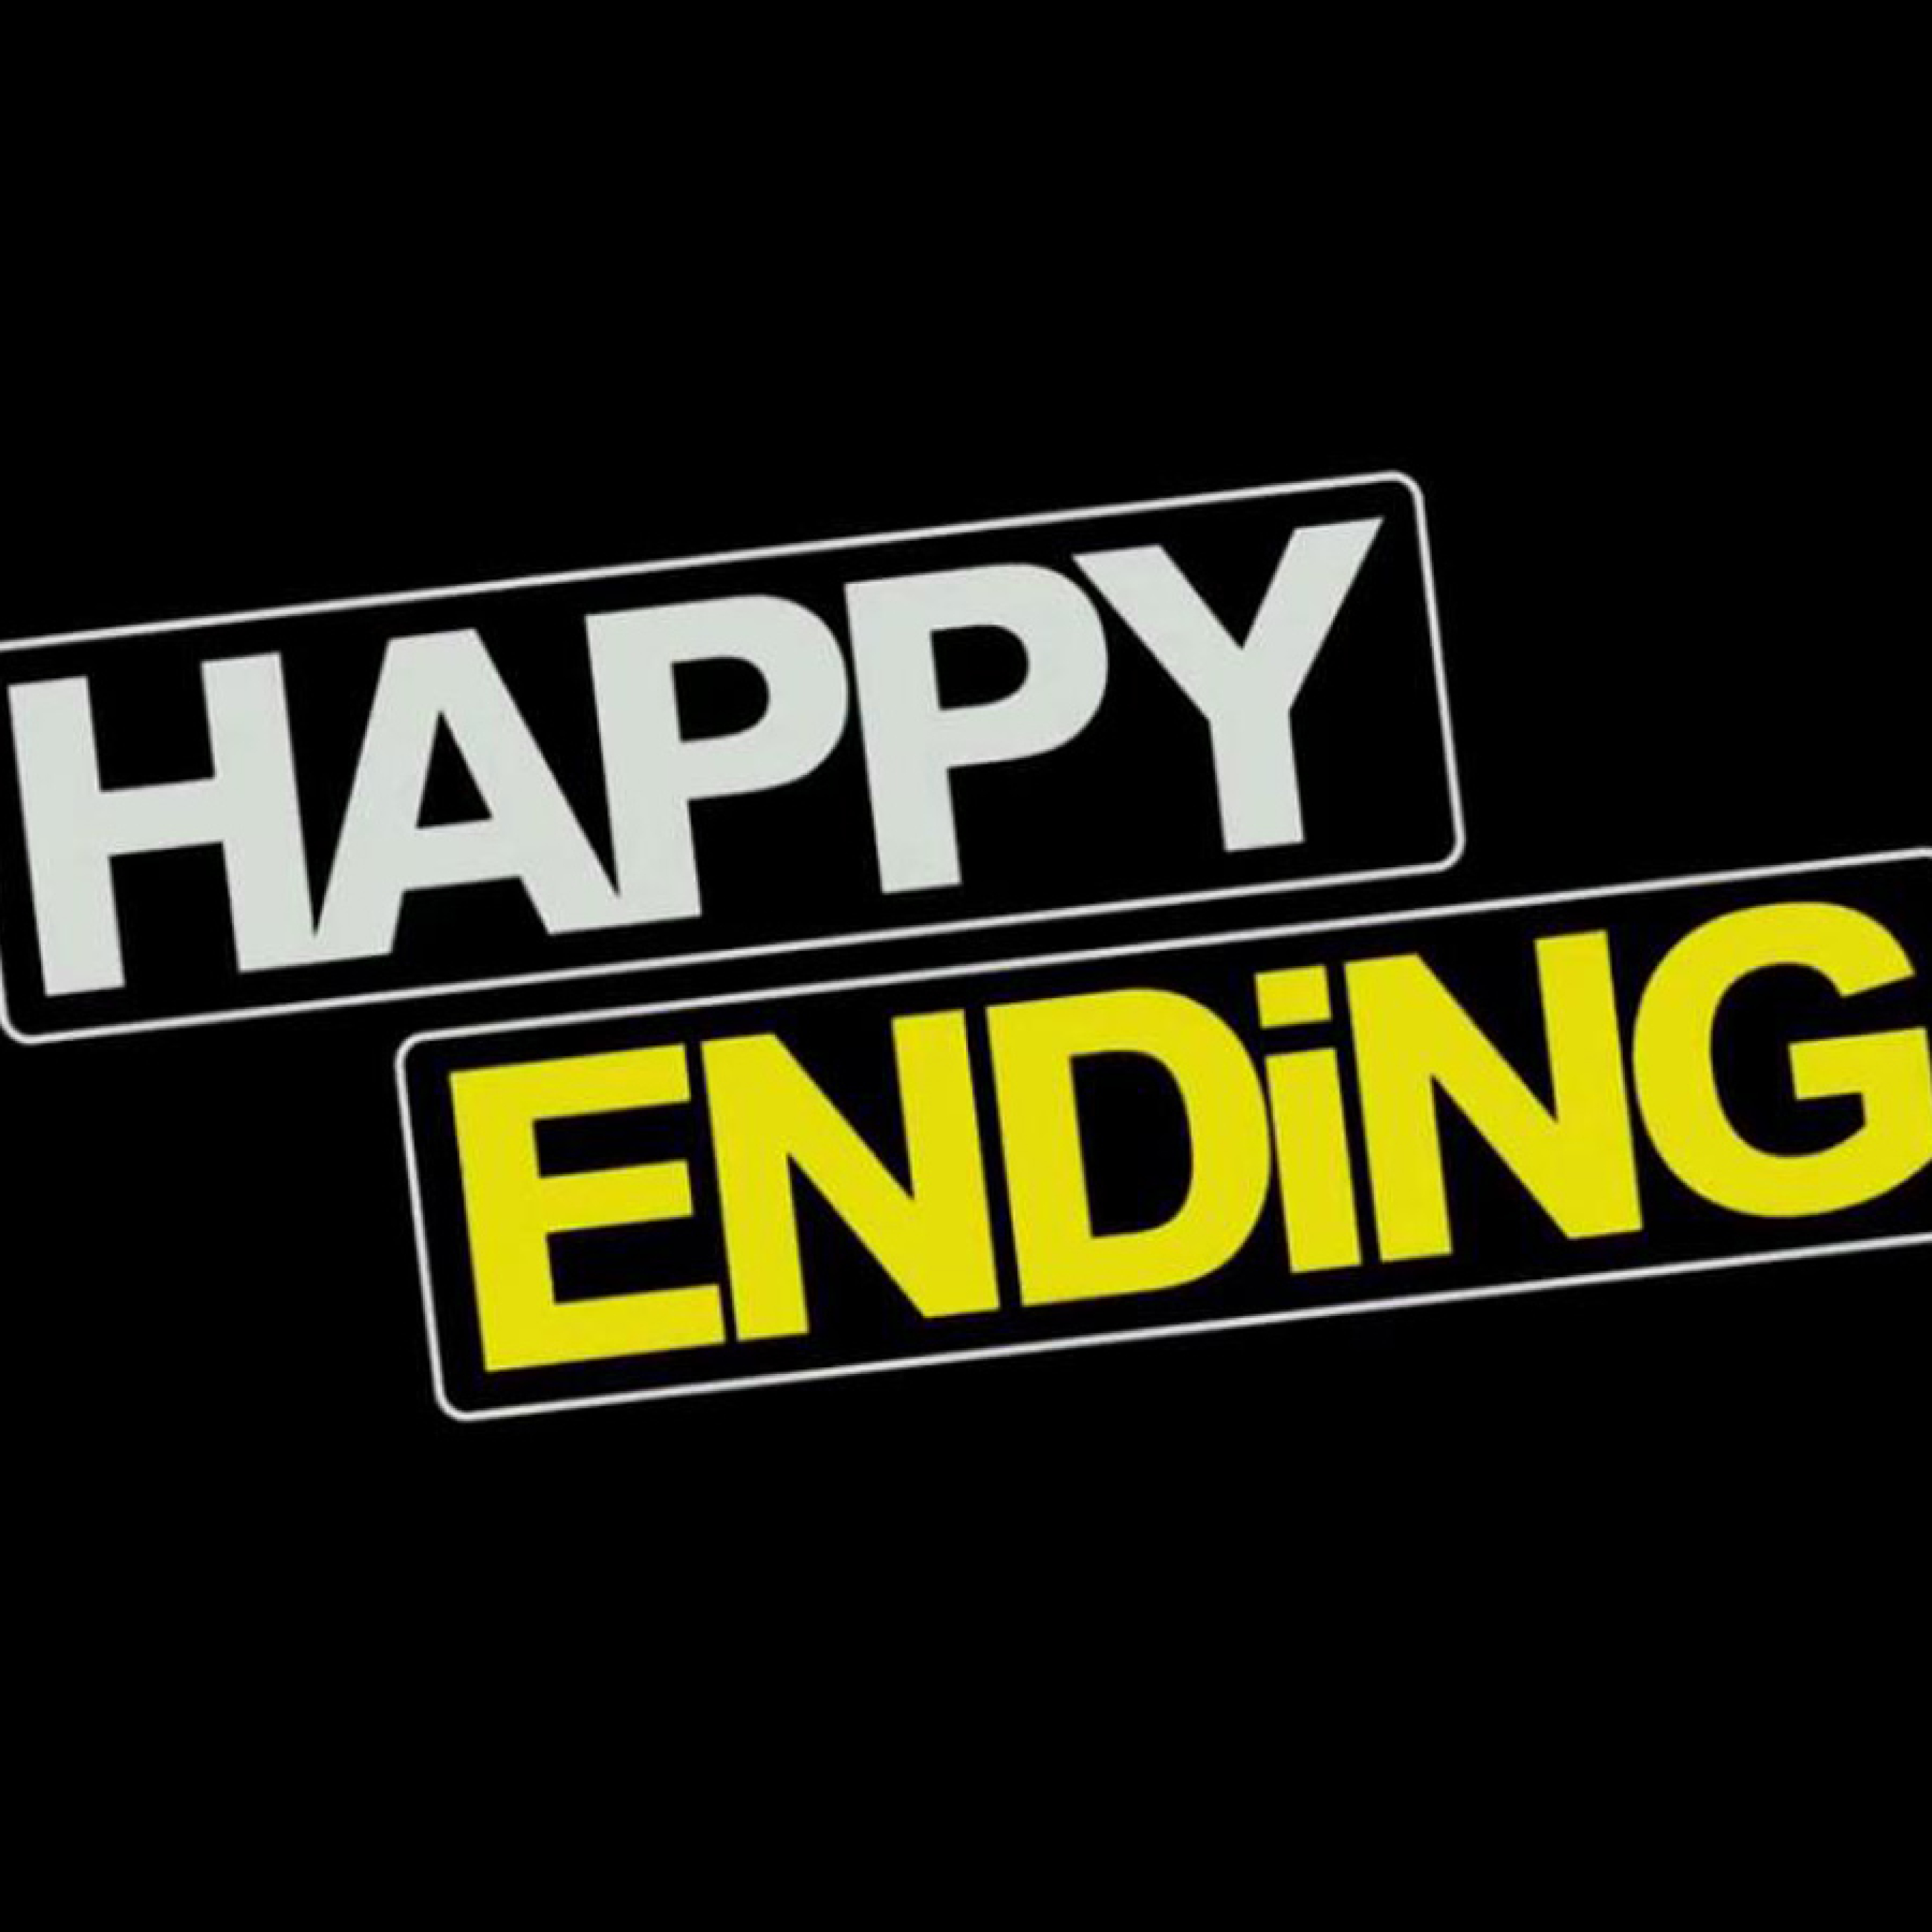 Real happy ending